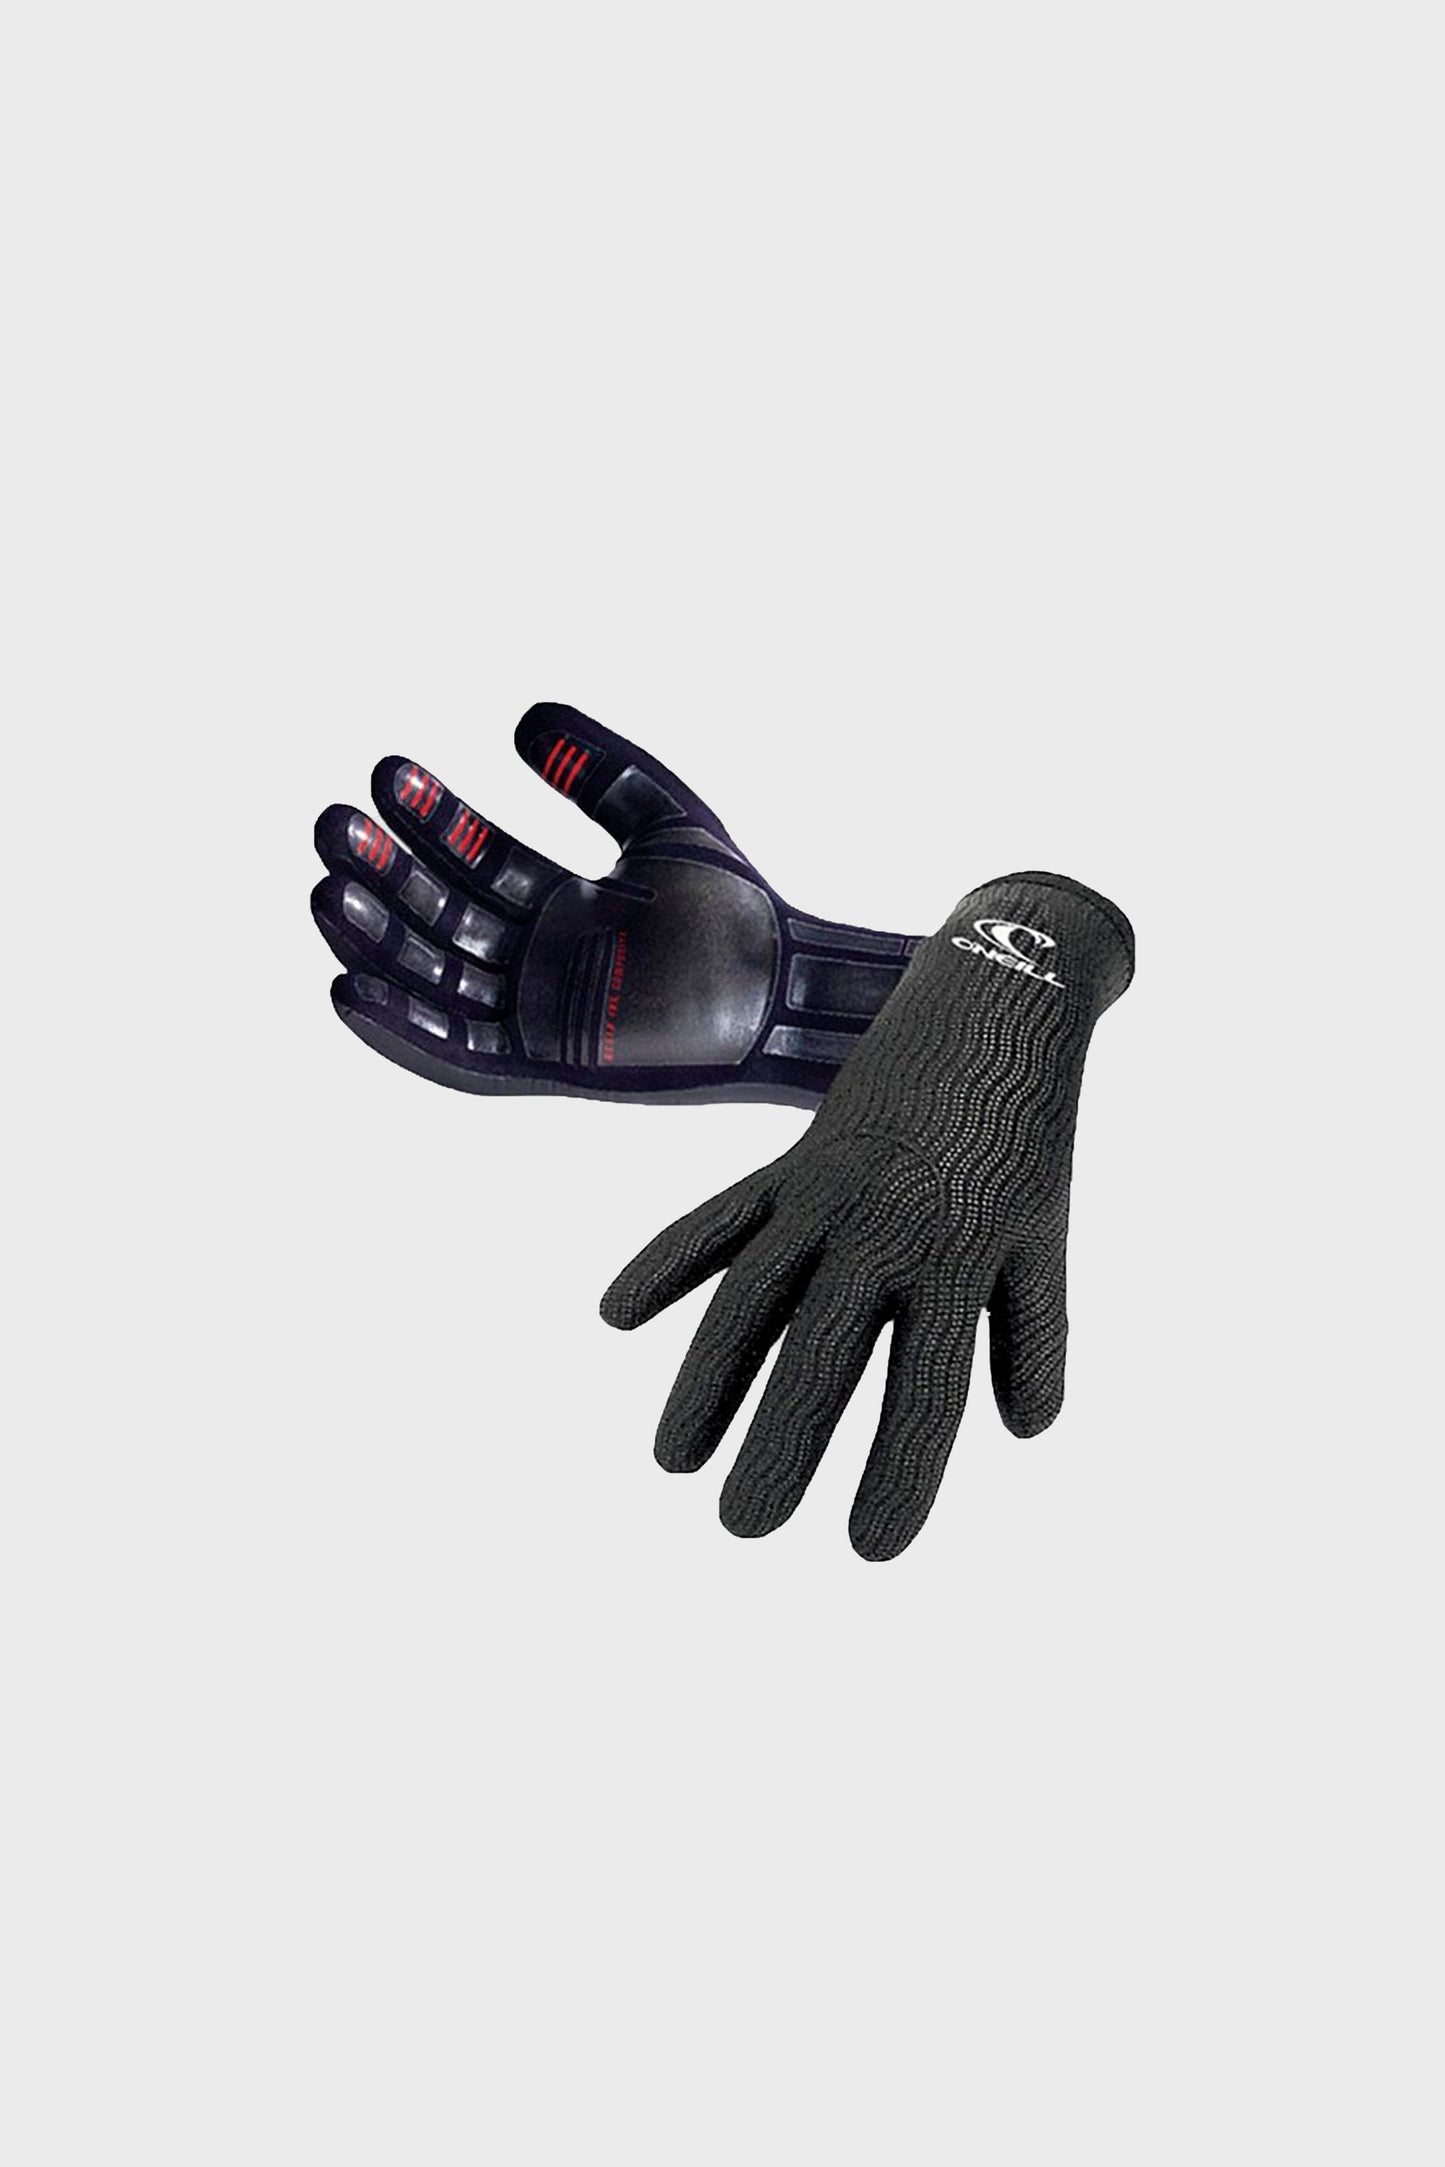 pukas-surf-shop-oneill-wetsuit-glove